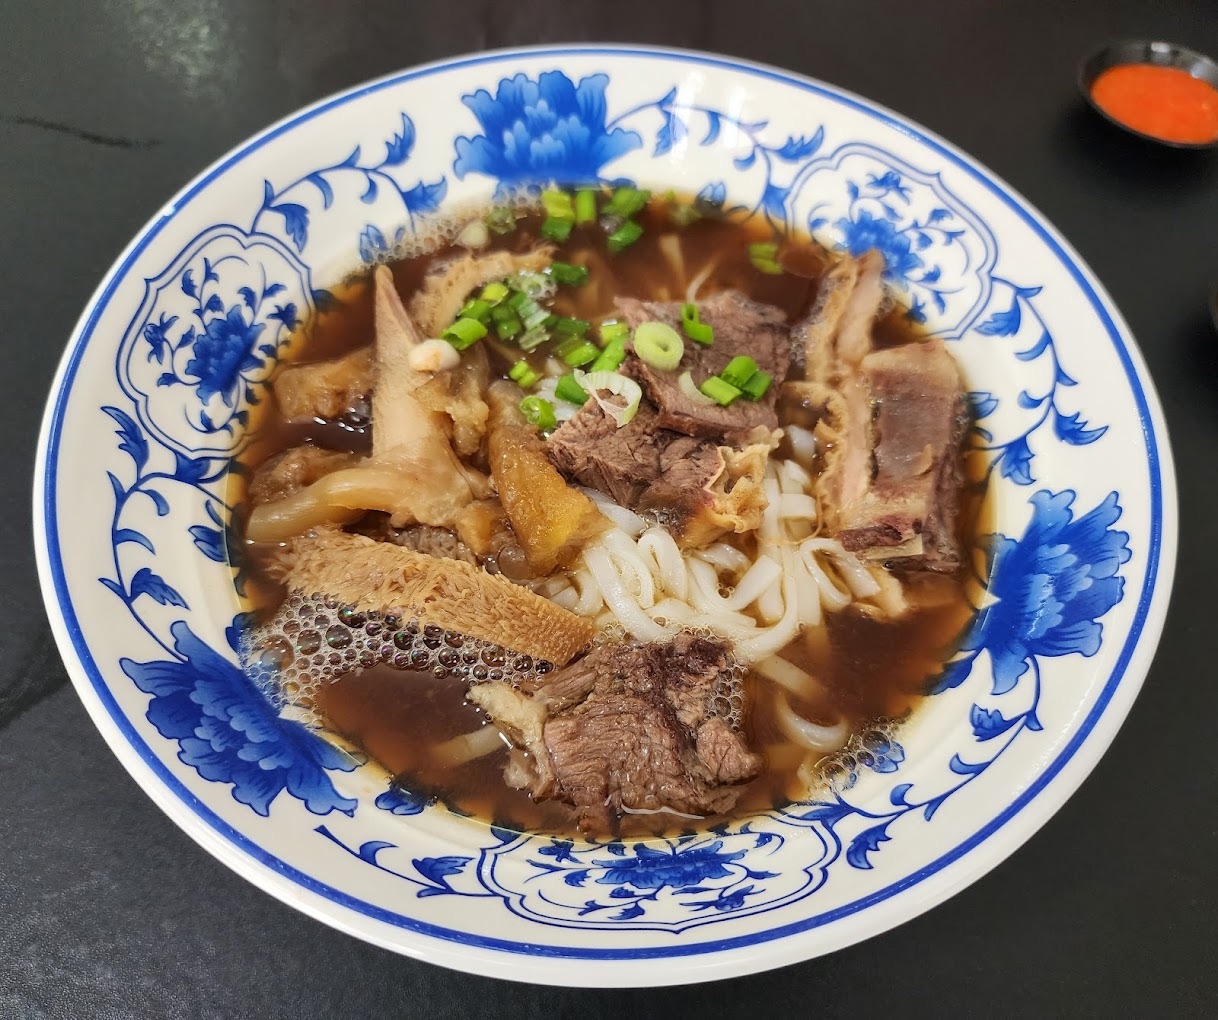 Yung Kee Hong Kong beef noodles with a Malaysian twist